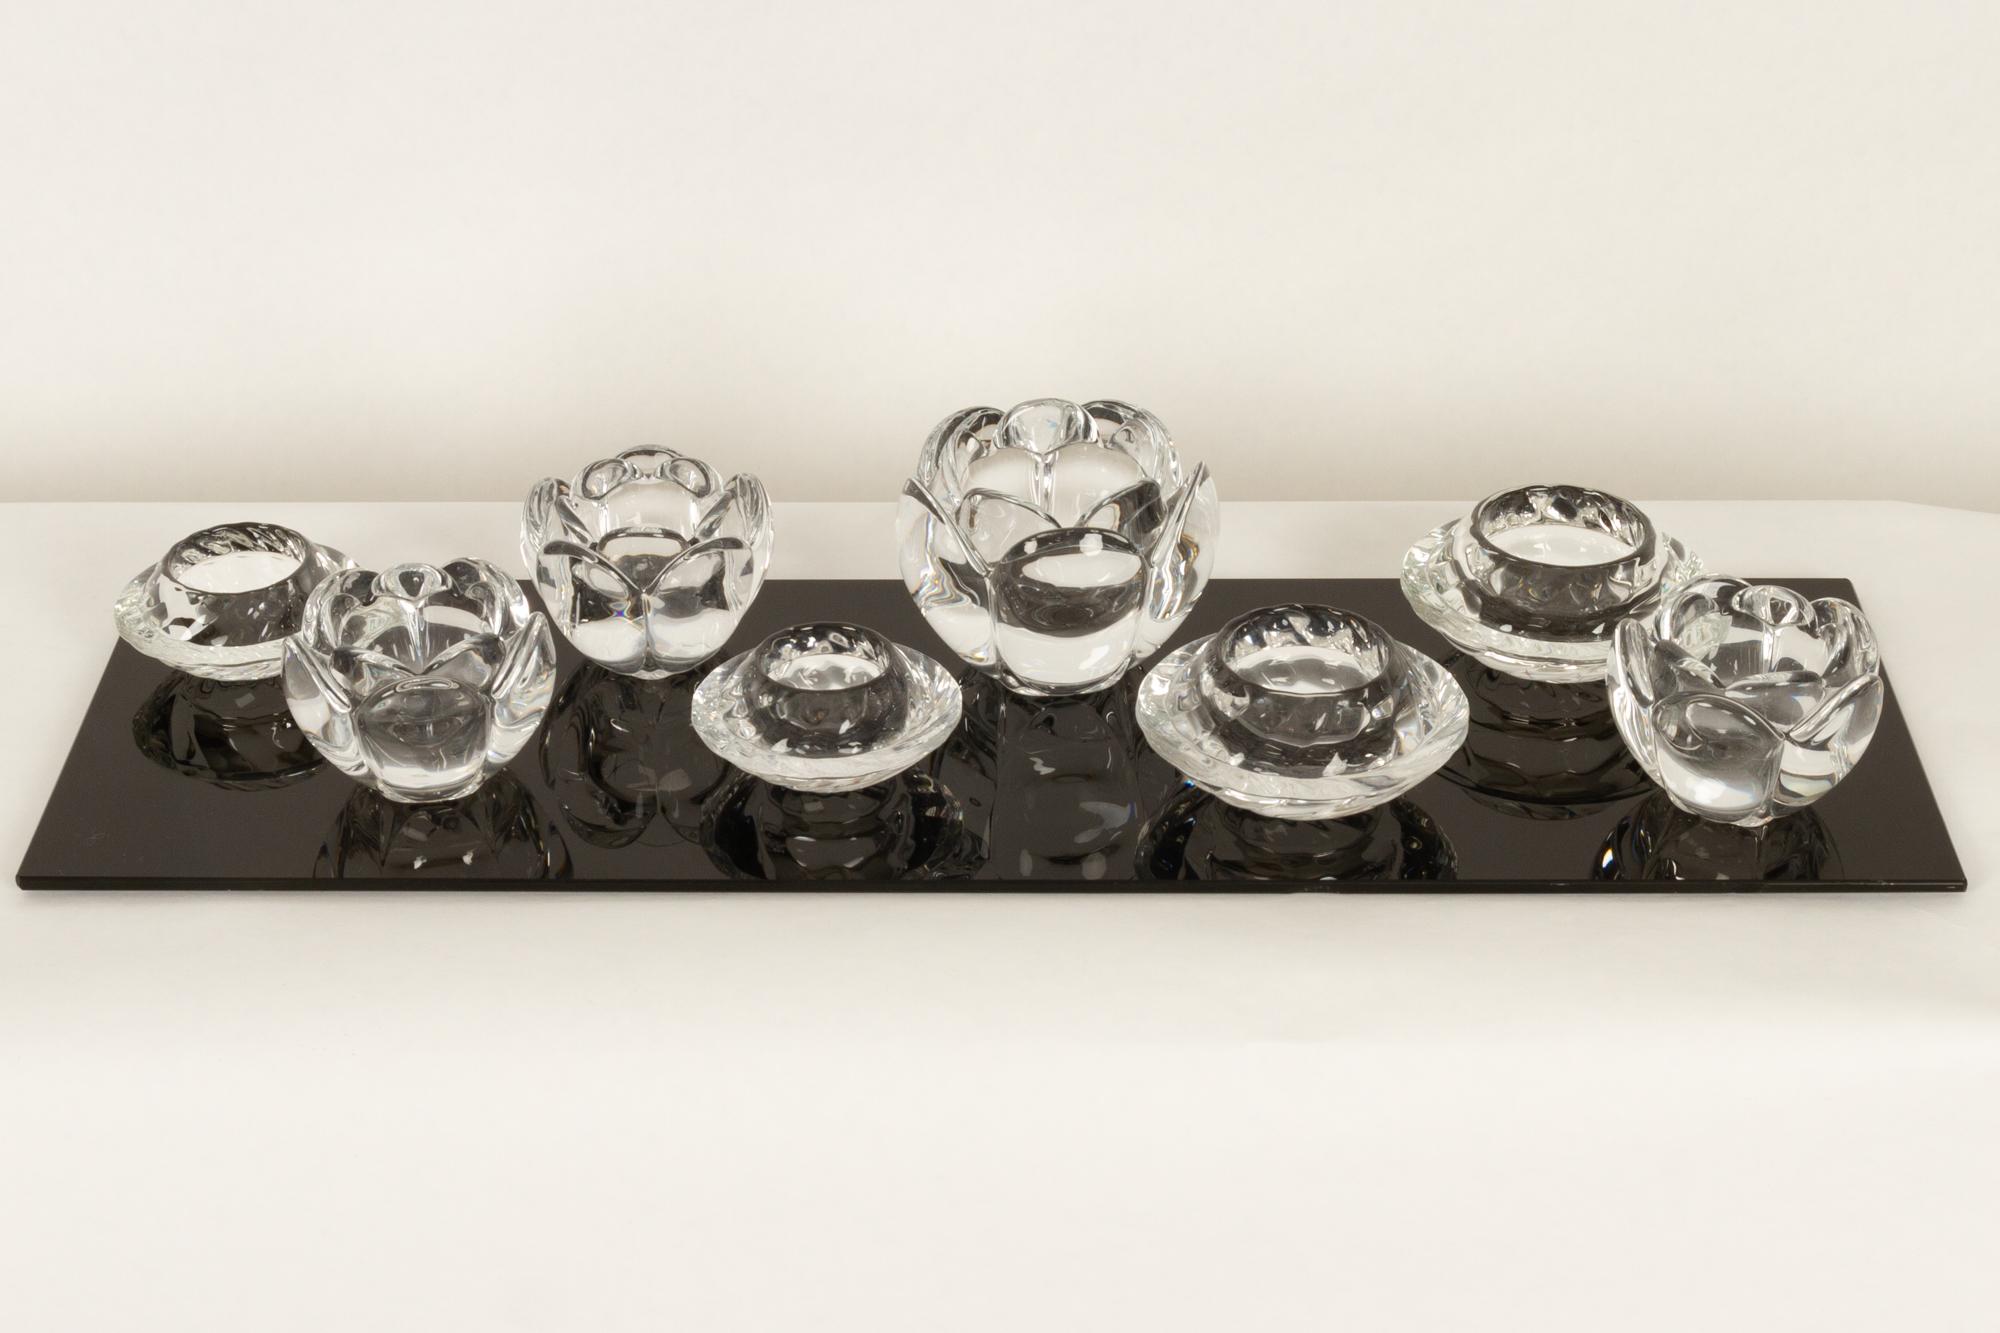 Set of 8 Holmegaard glass candleholders, 1980s
Set of four 